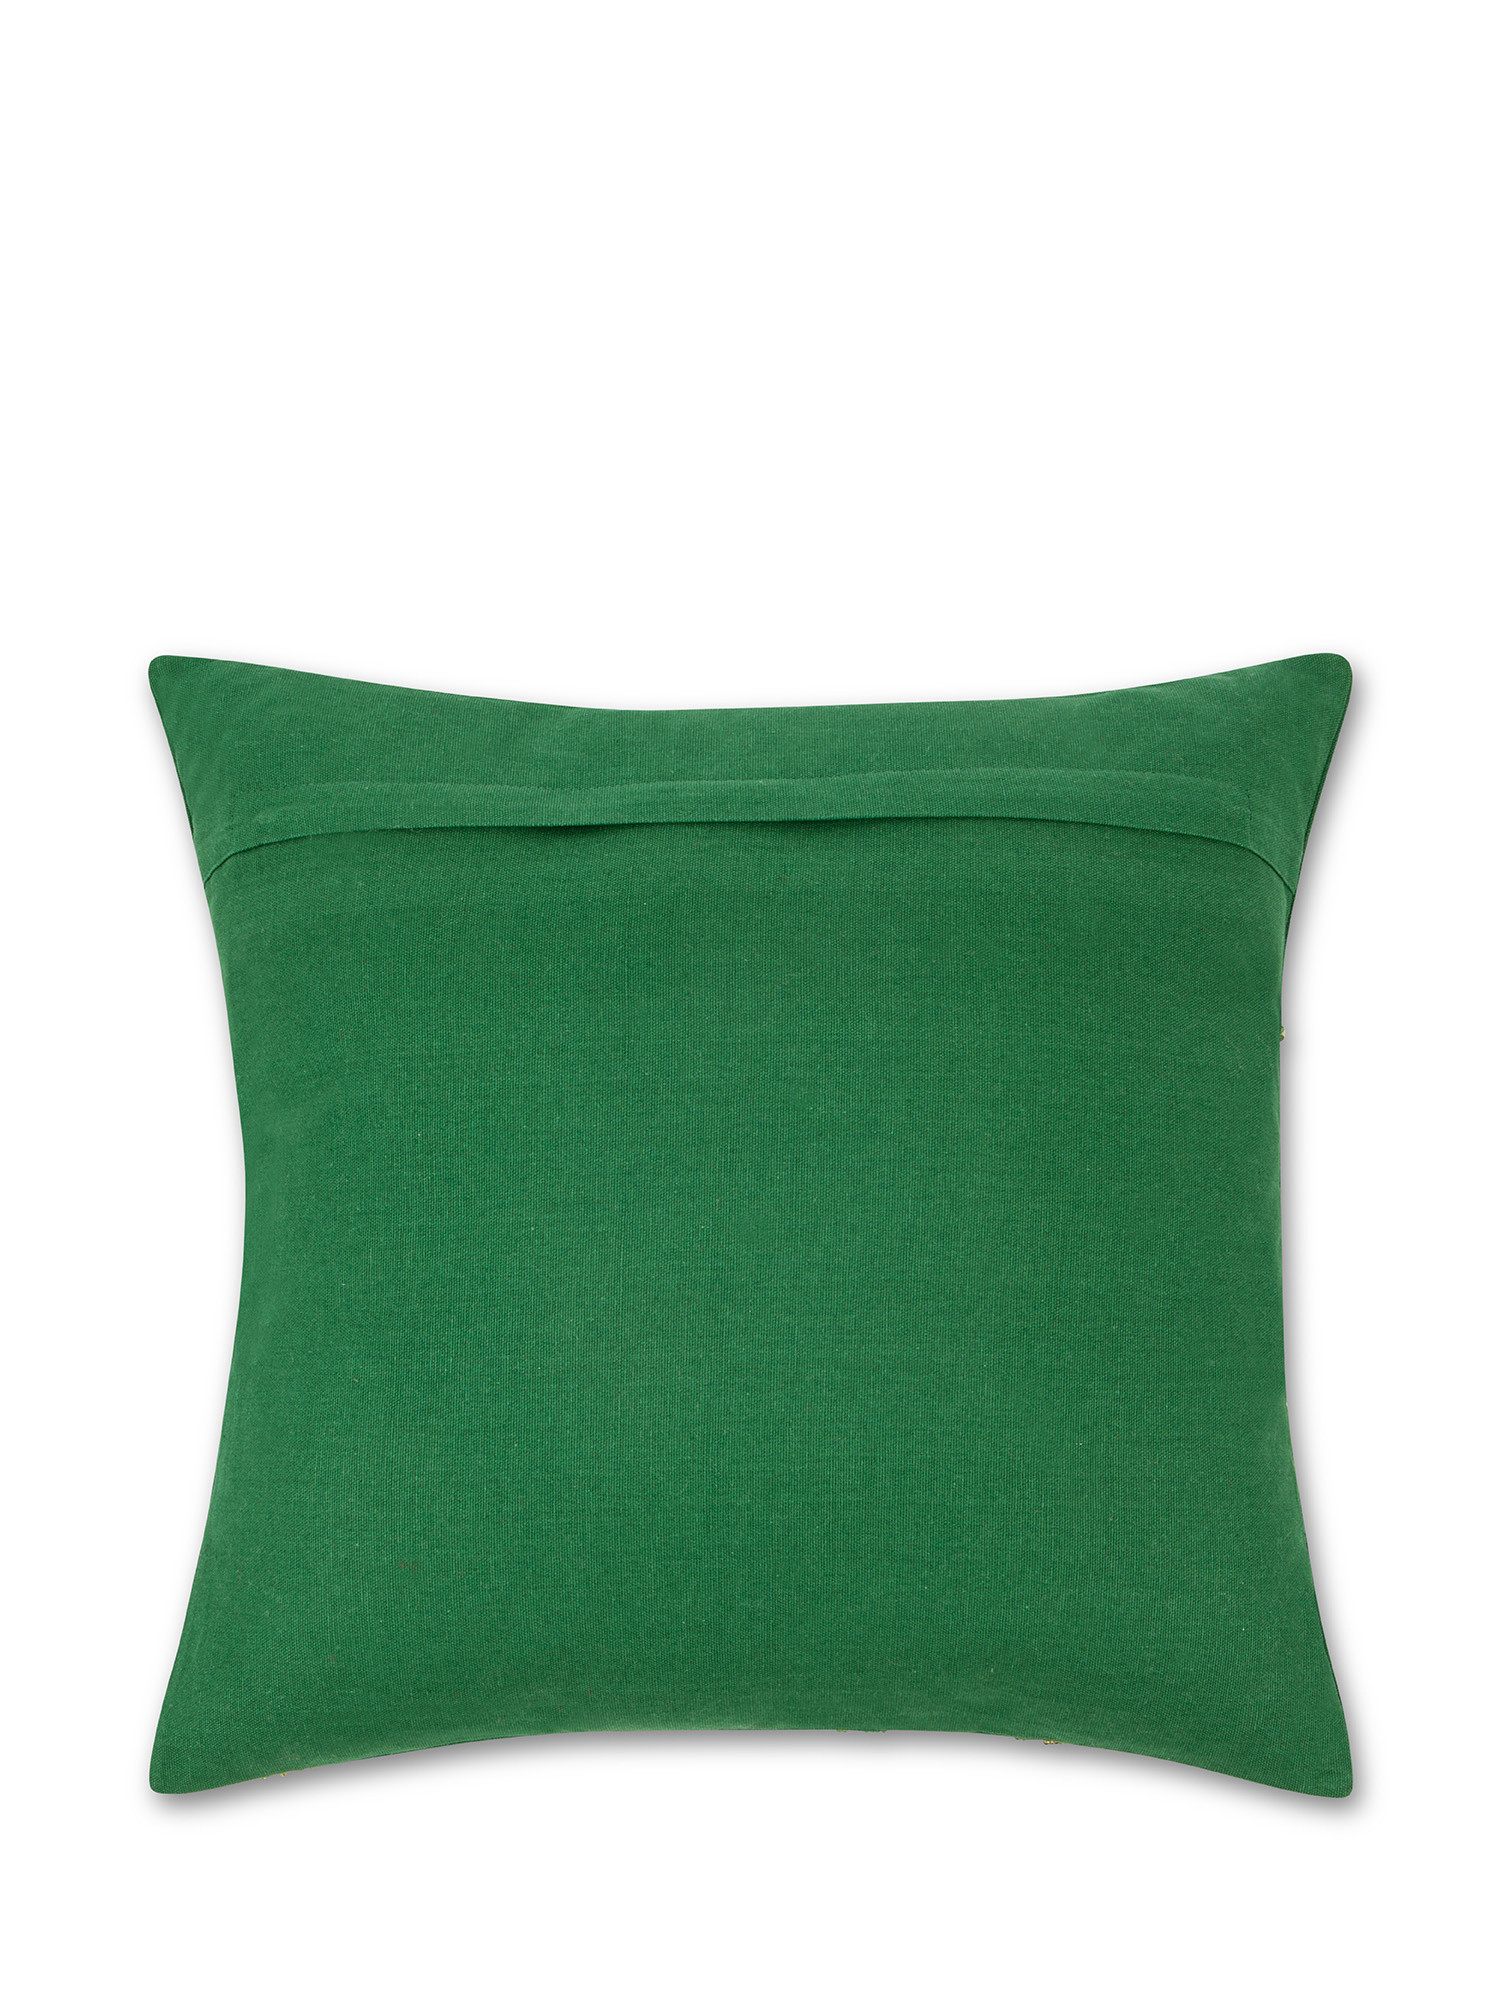 Cuscino tessuto ricamo perline 45x45cm, Verde, large image number 1